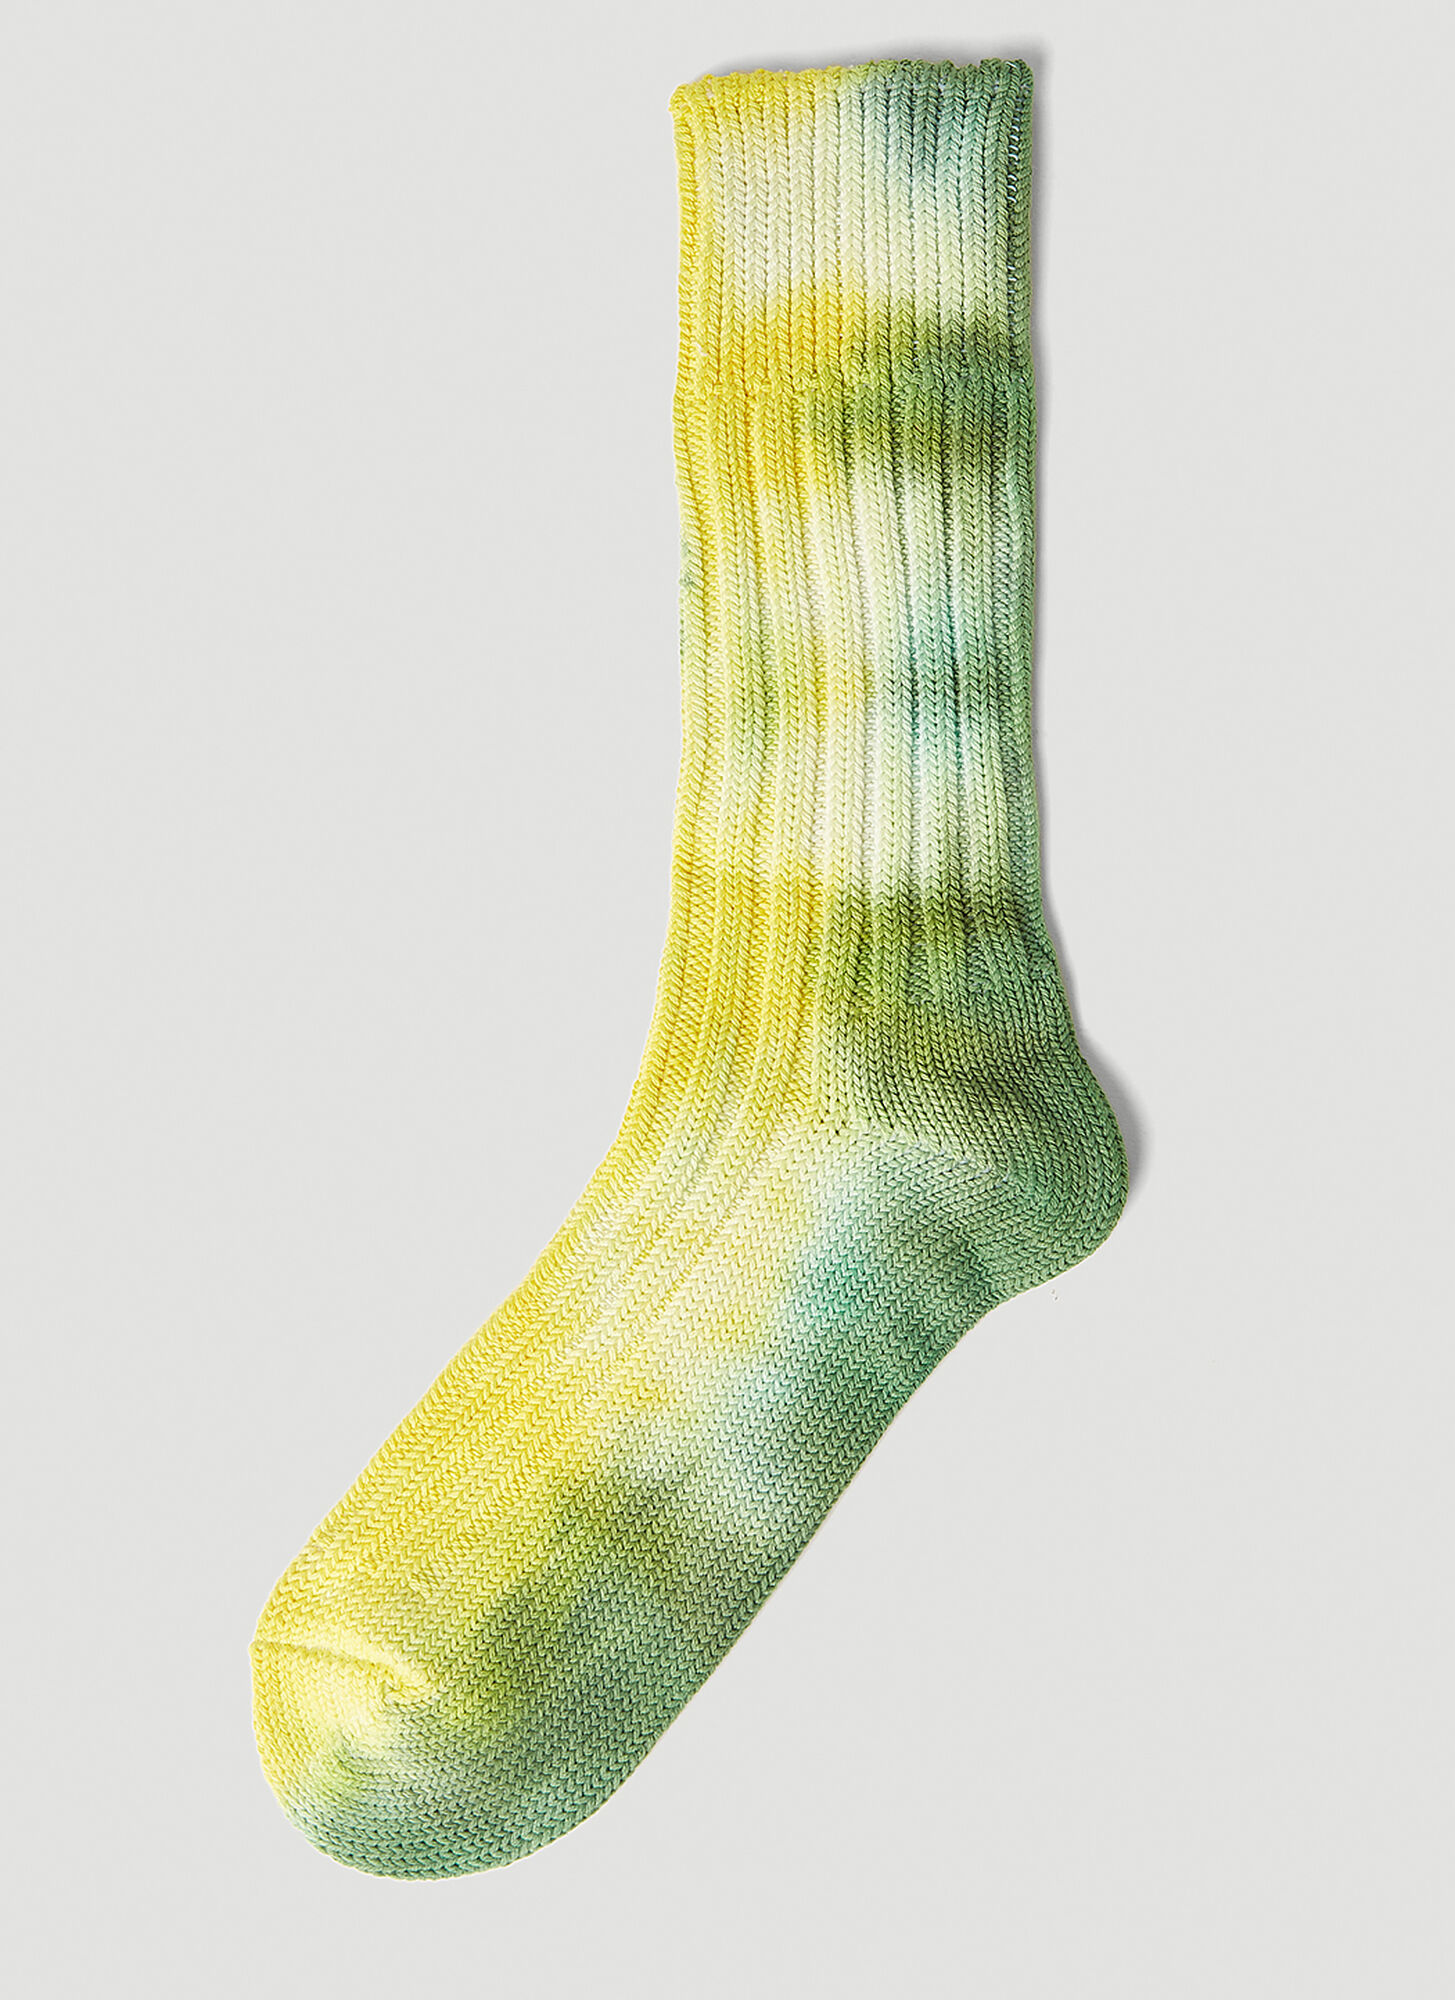 Stain Shade X Decka Socks Tie Dye Socks Unisex Green